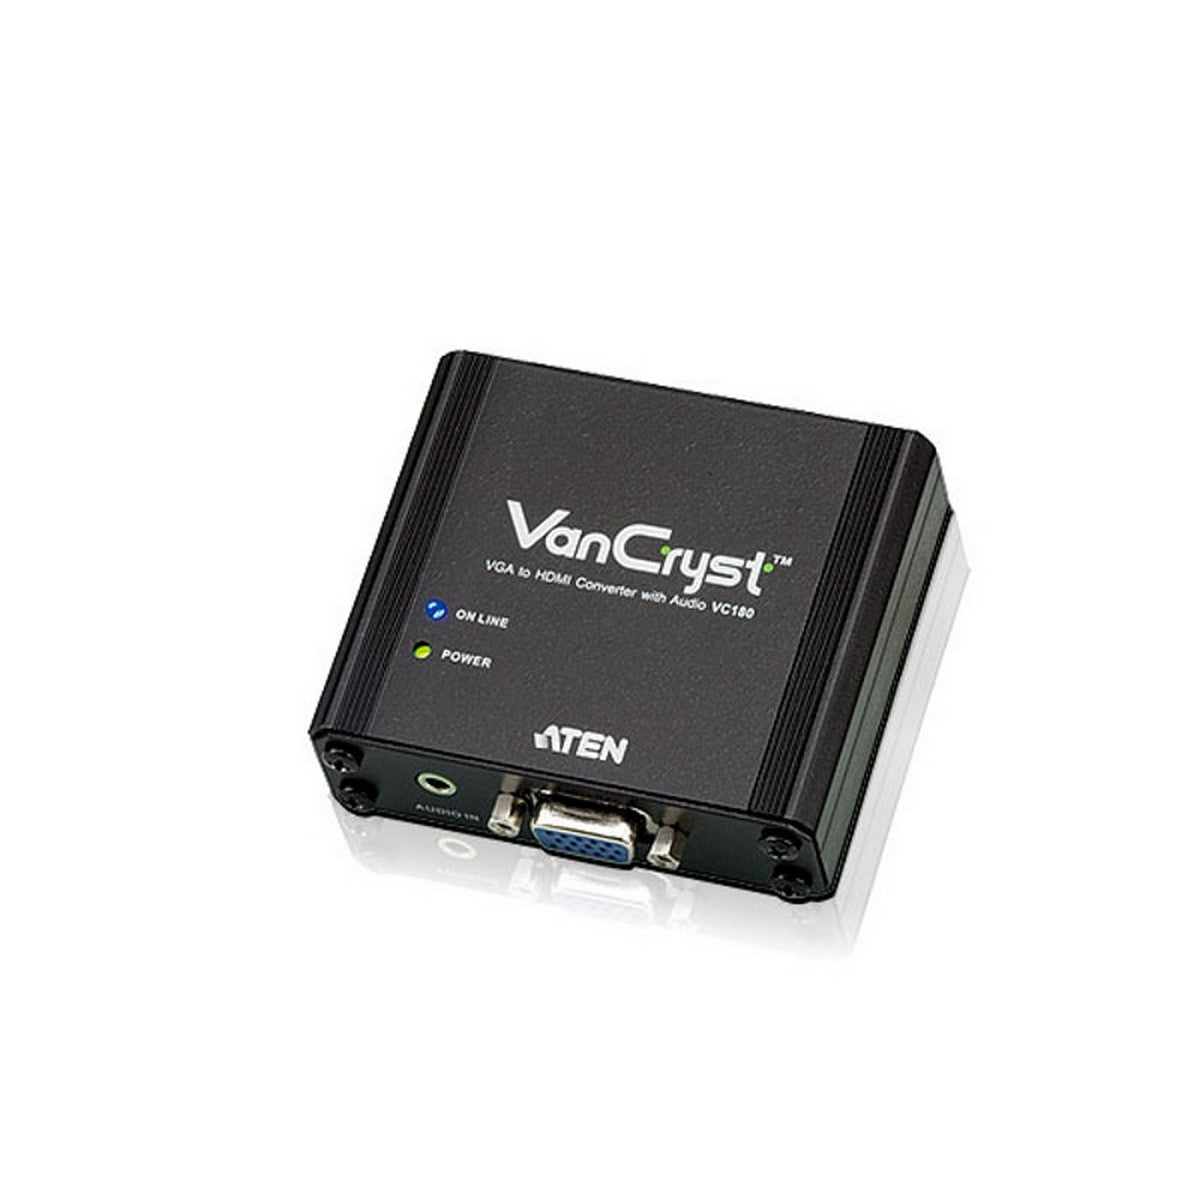 ATEN VC180 | VGA Audio to HDMI Converter